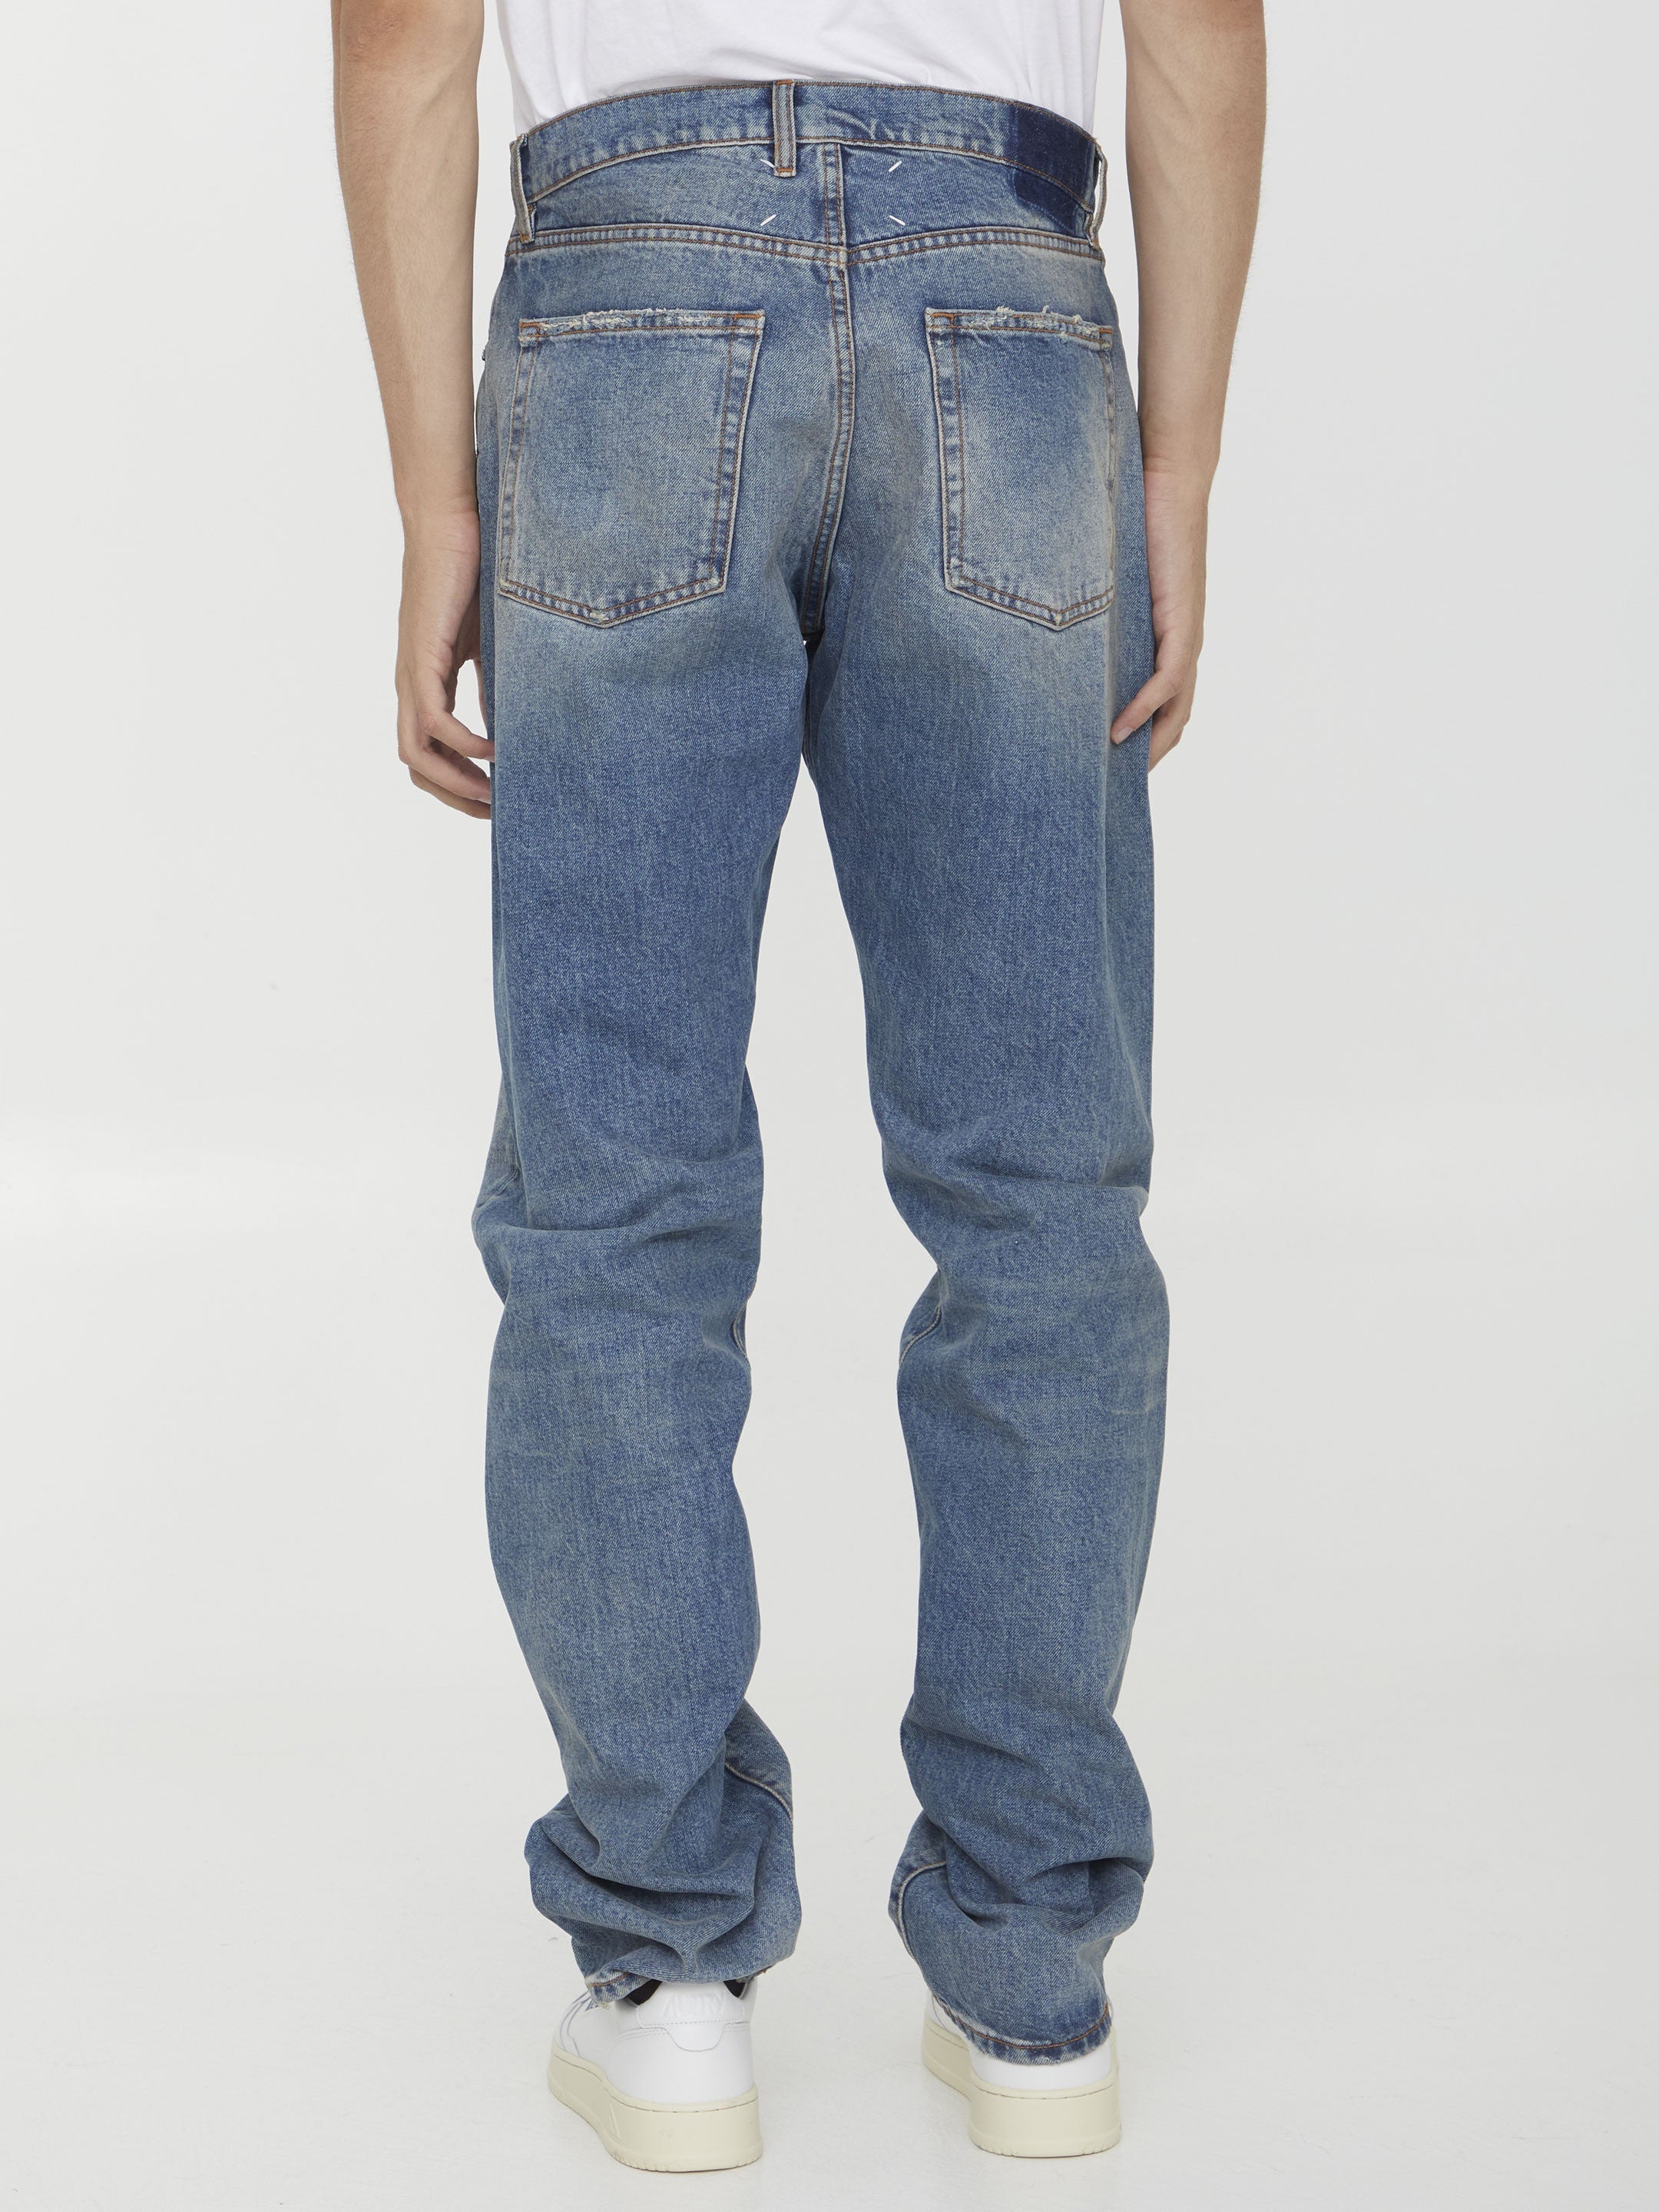 Distressed denim jeans